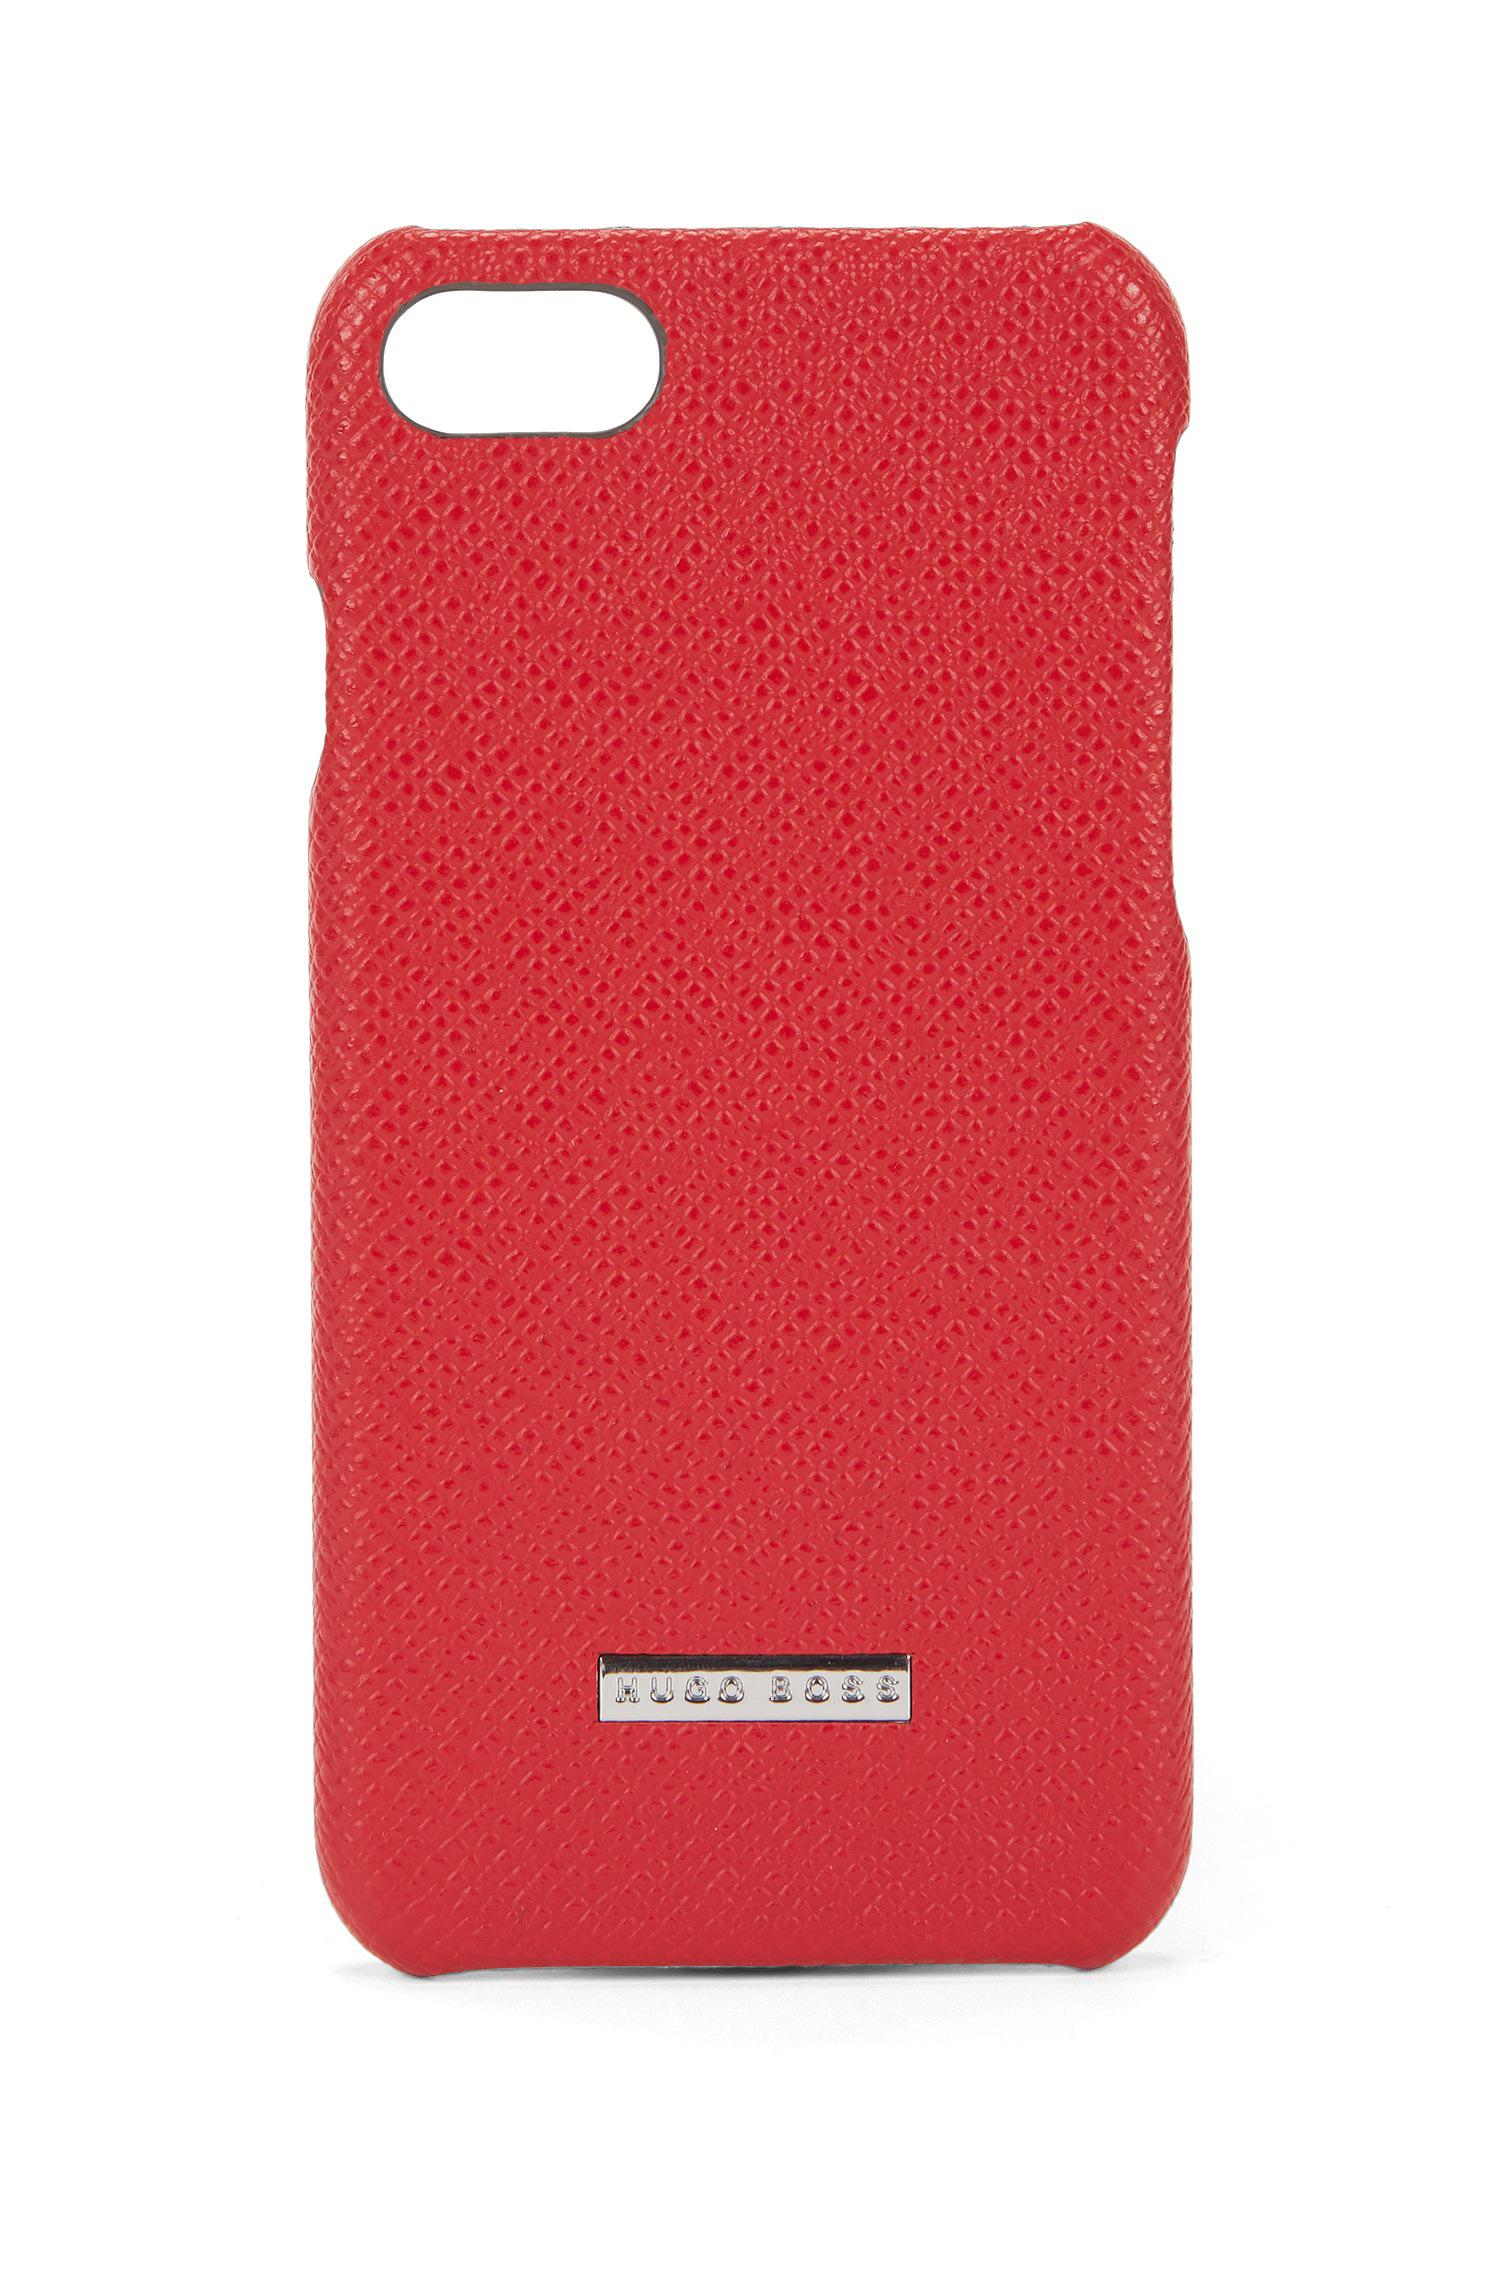 Hugo Boss Emed Leather Iphone 7 Case 